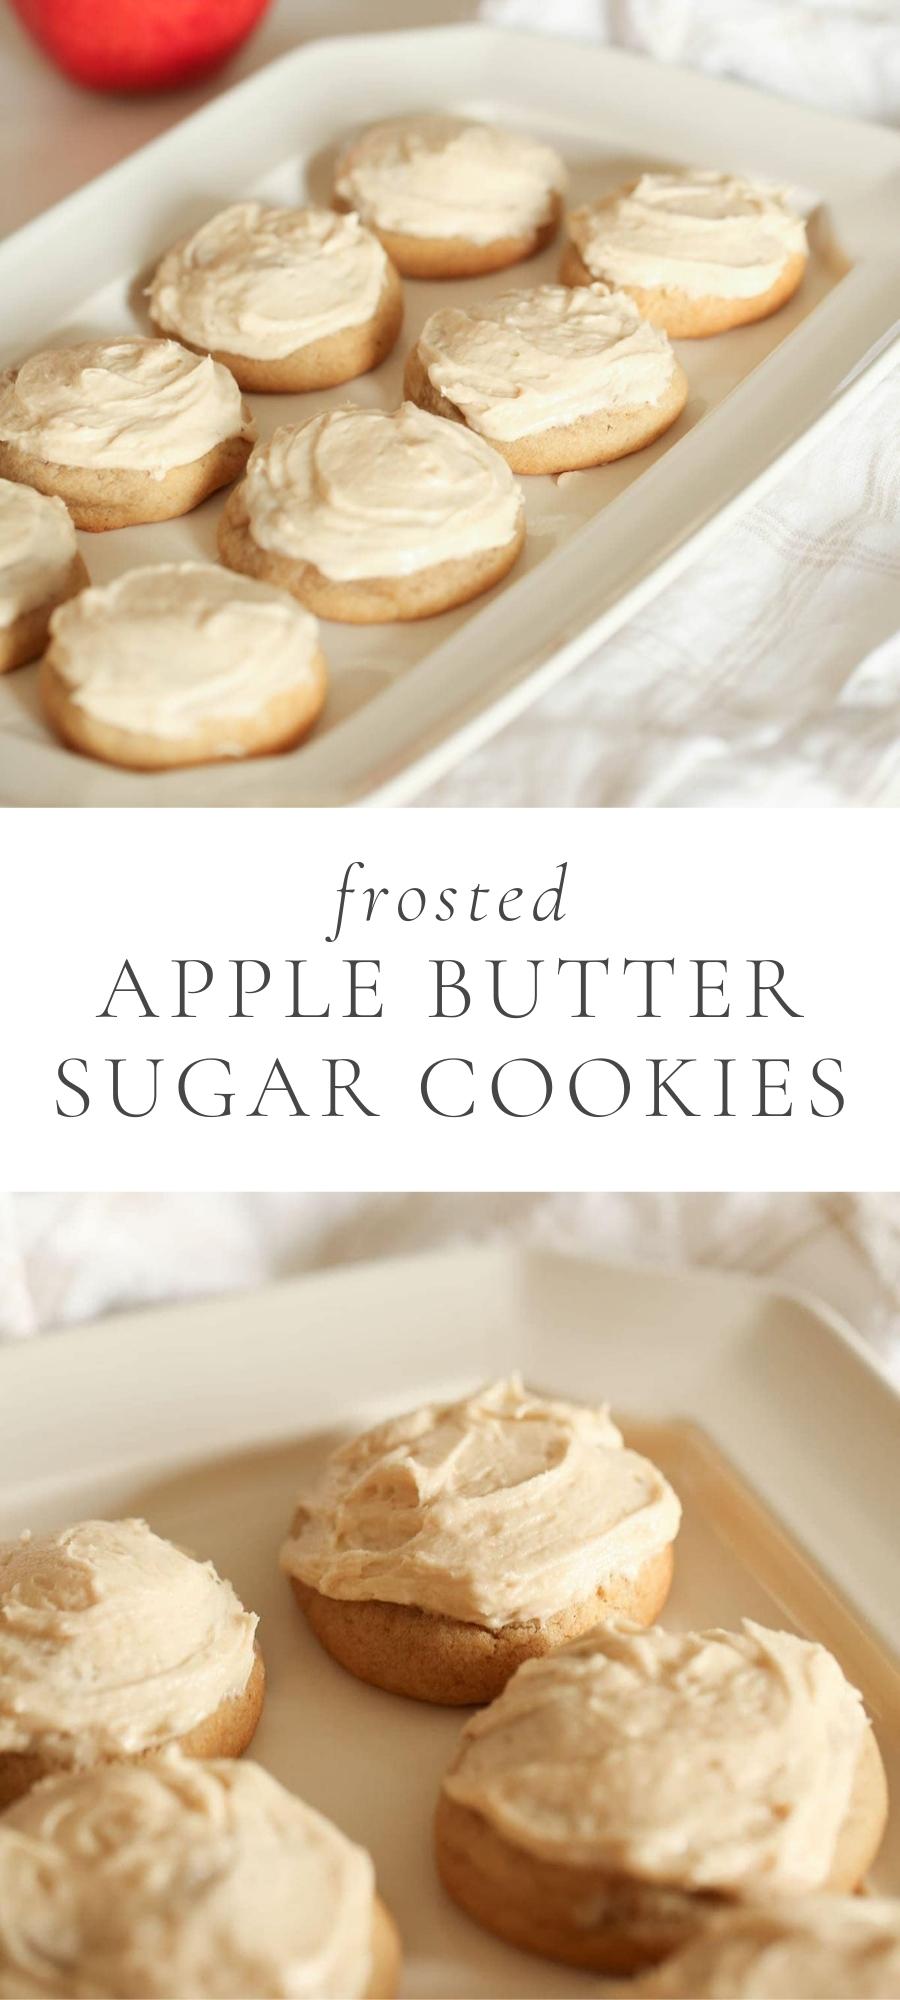 apple butter sugar cookies in plate